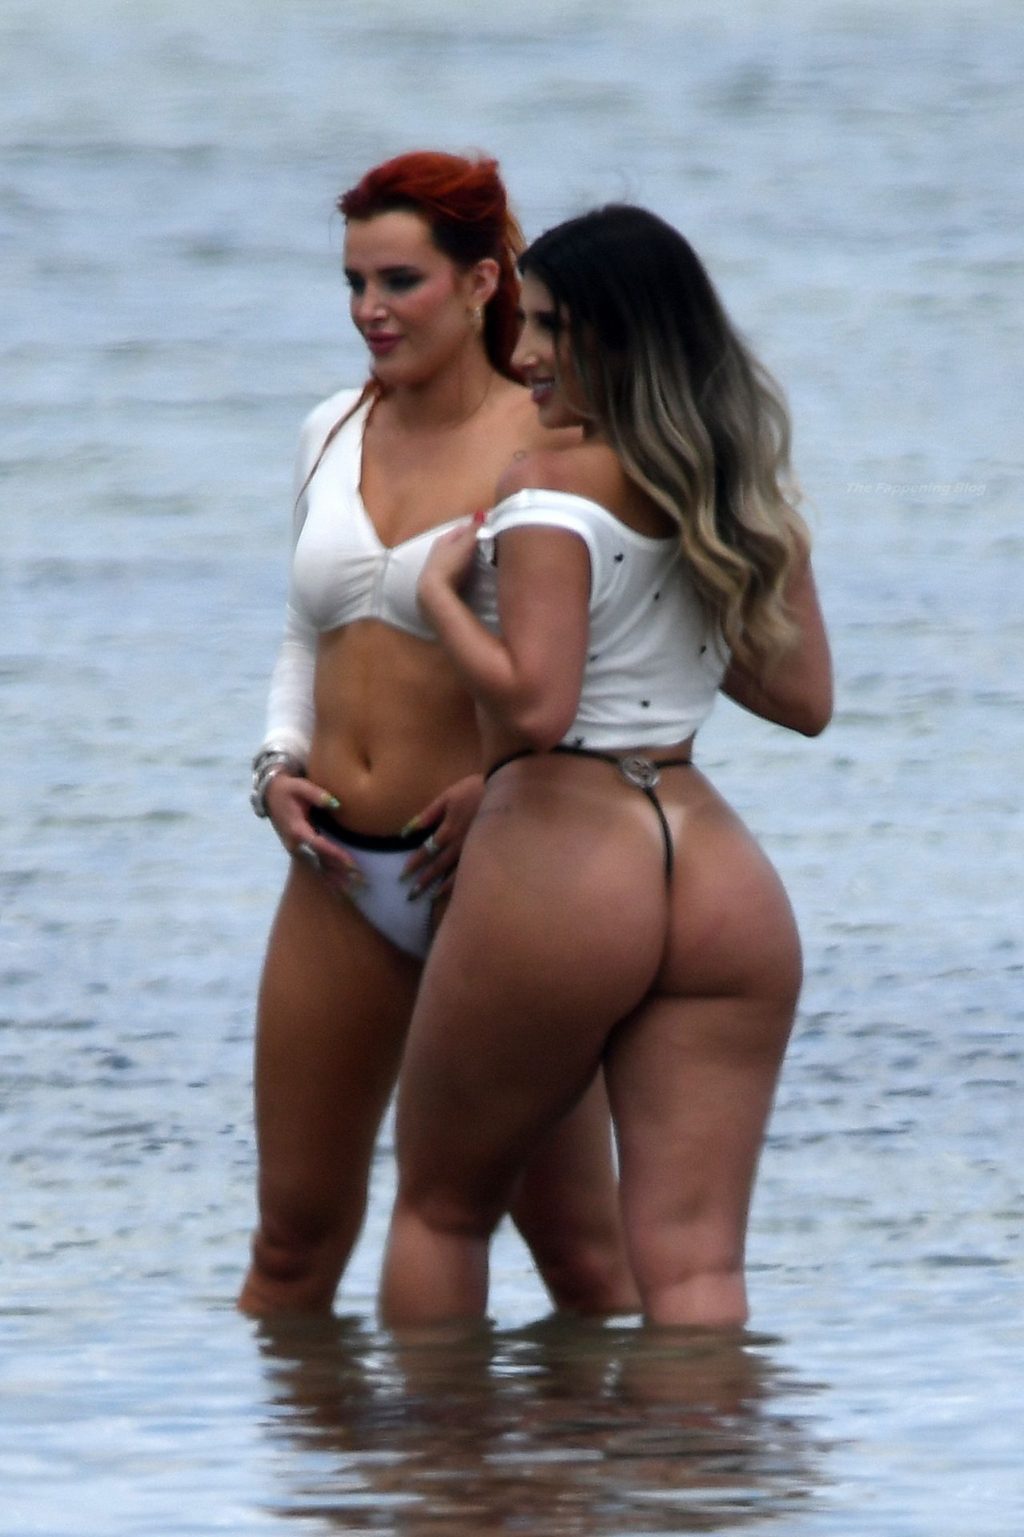 Bella Thorne Poses in a White Bikini During a Photoshoot on the Beach in Miami (53 Photos)